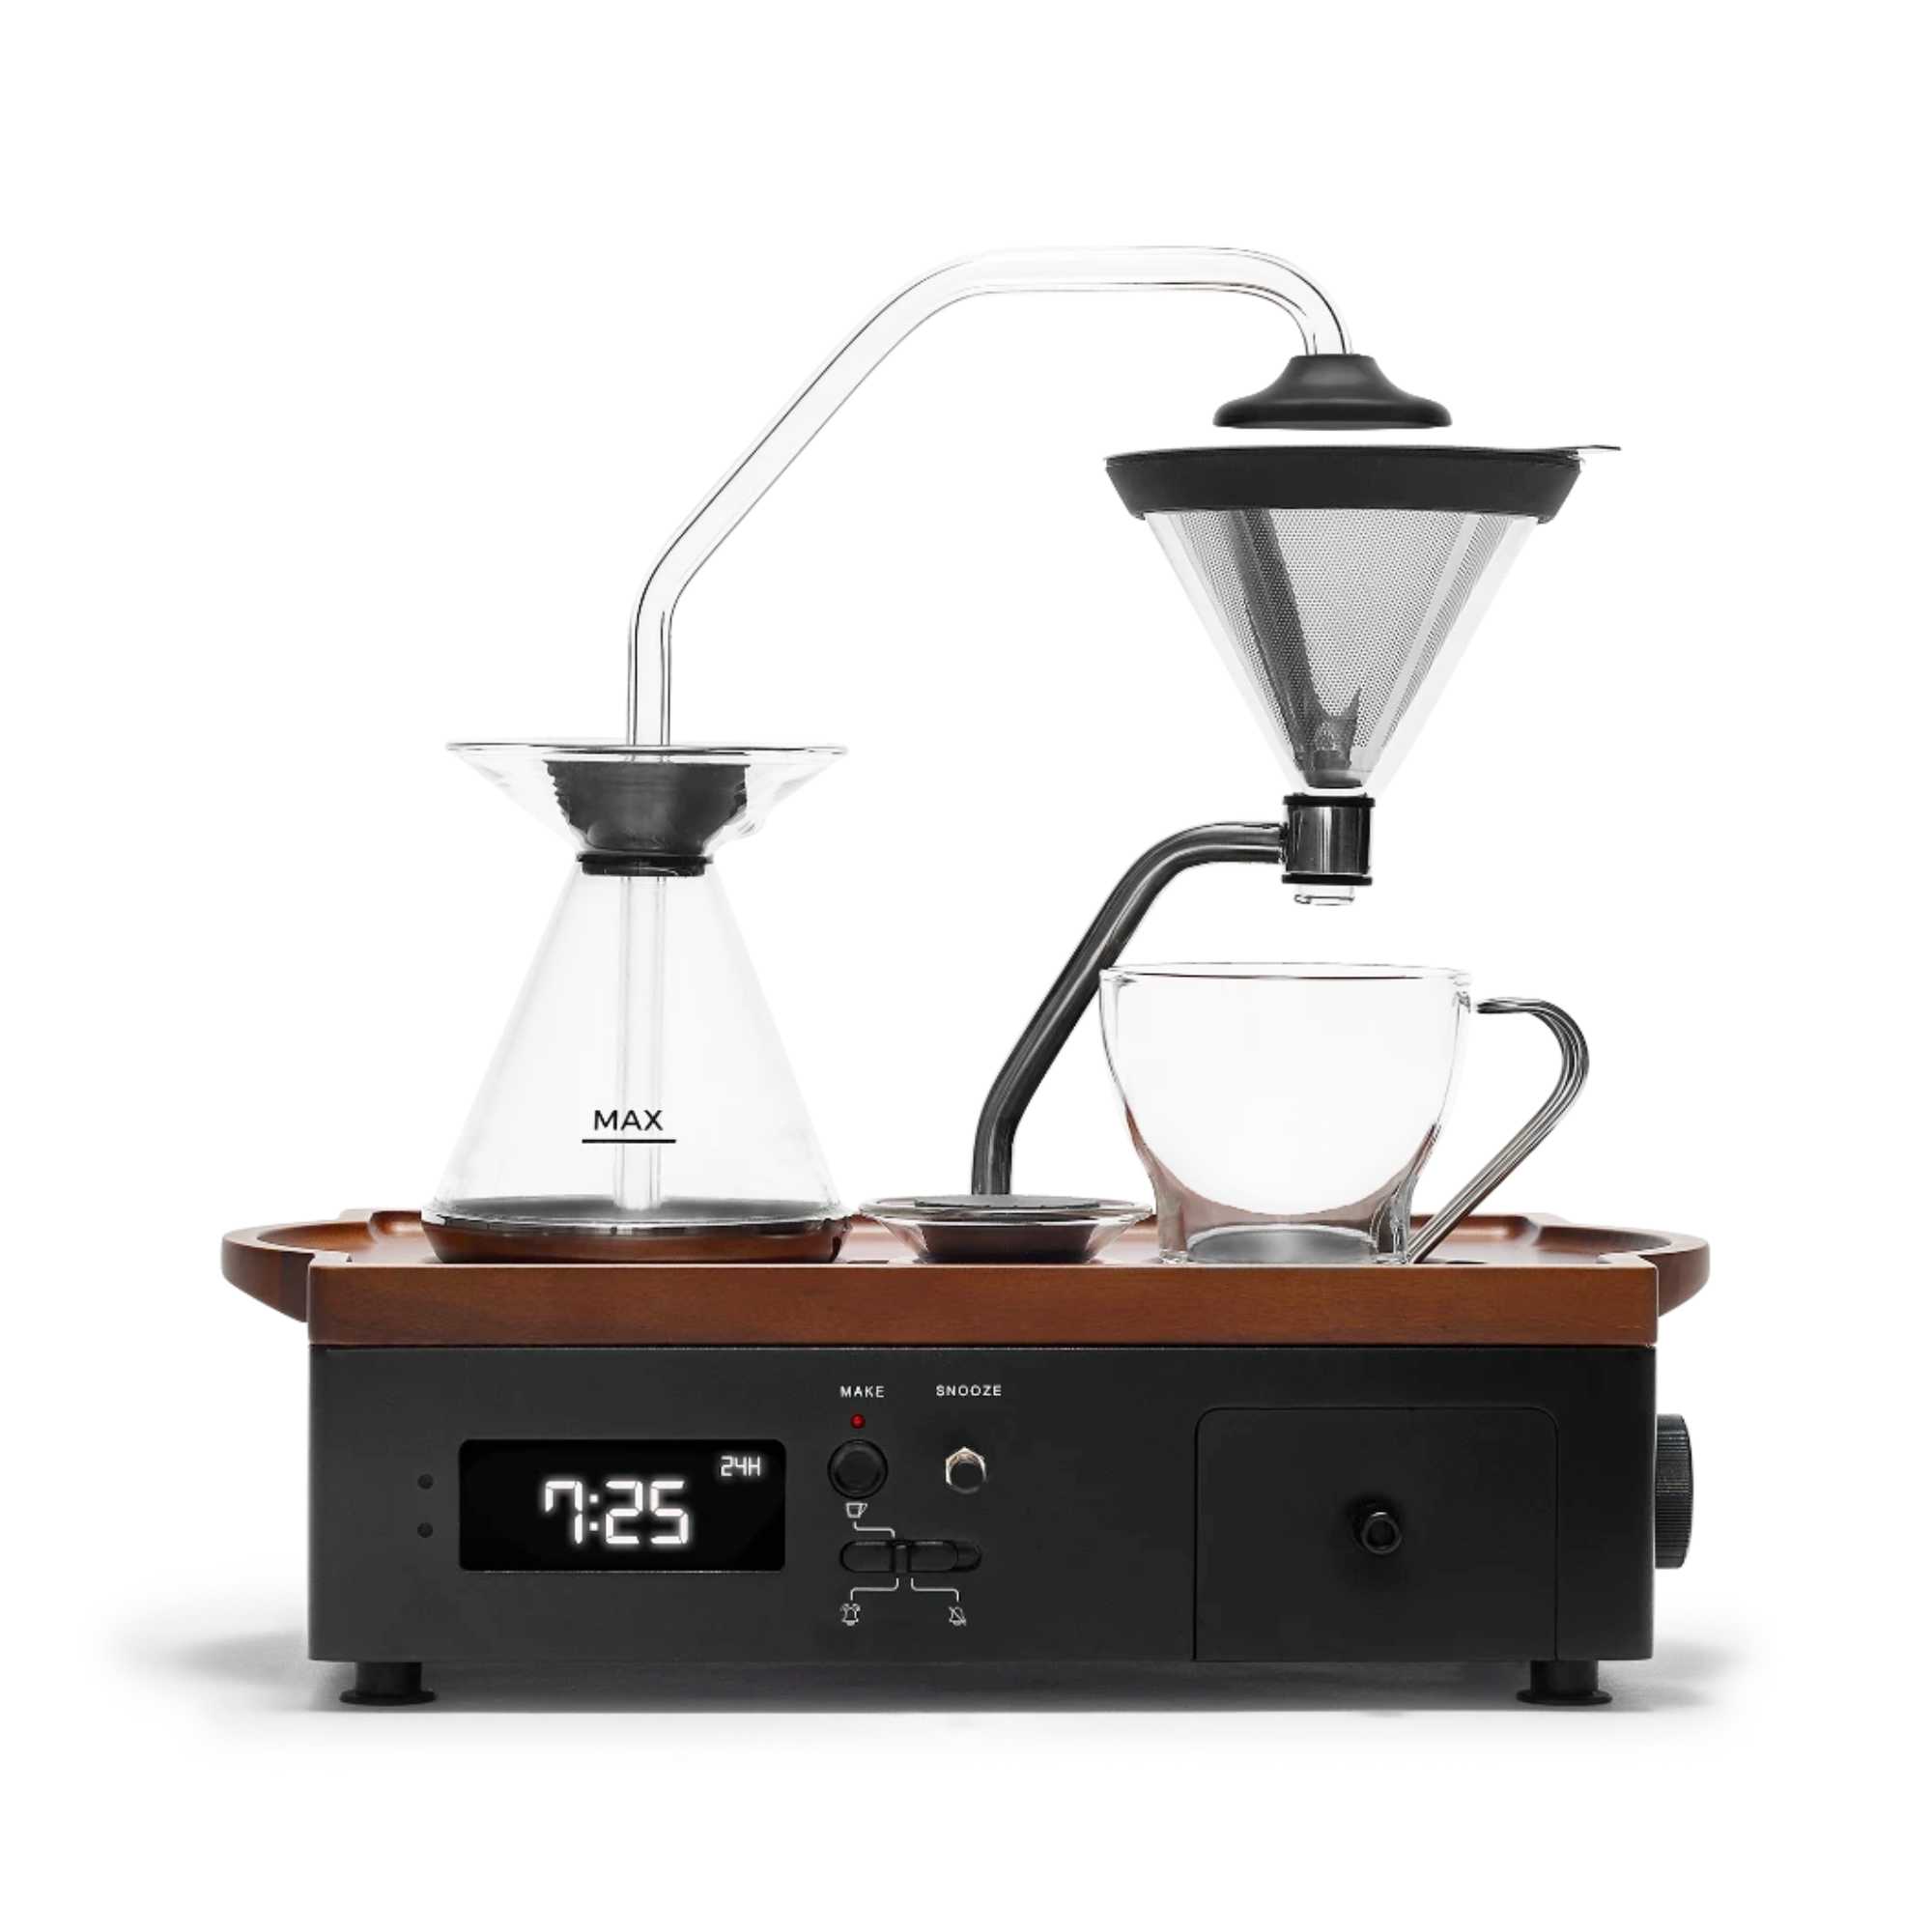 ex-display | Barisieur Coffee Brewing alarm clock, black